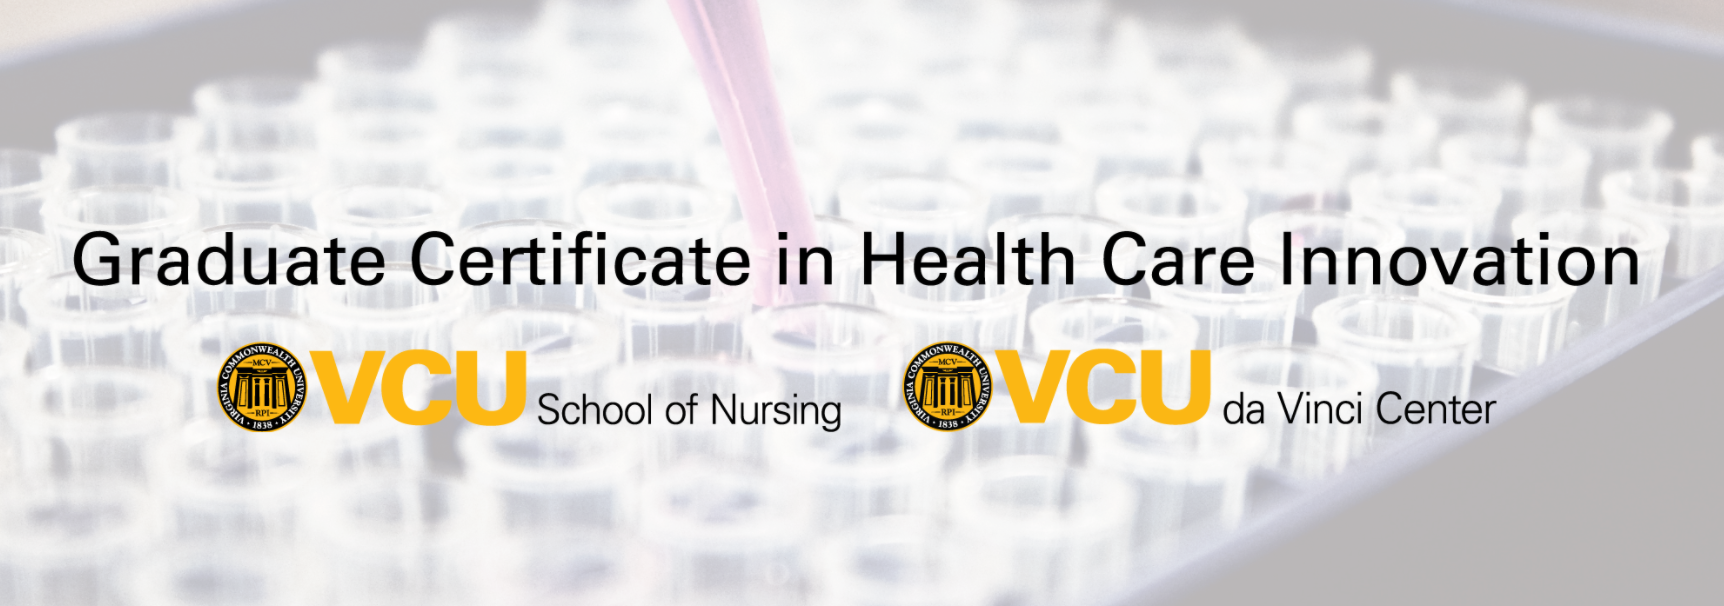 VCU launches certificate program to train future innovators in healthcare